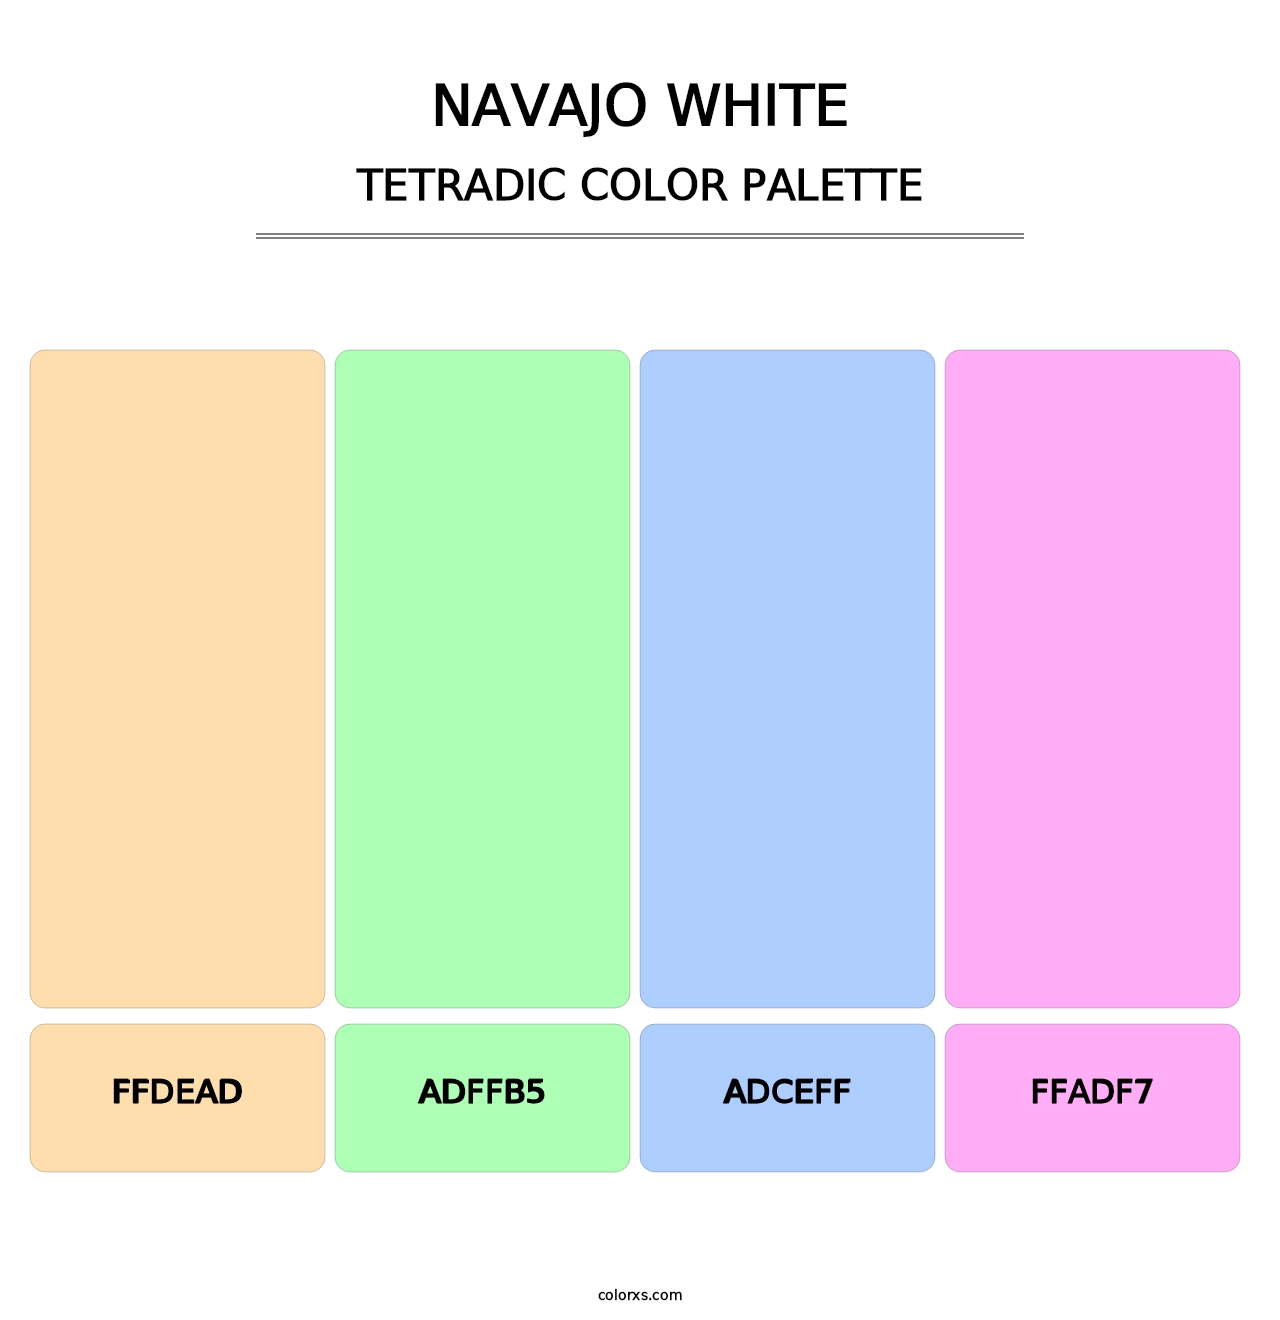 Navajo White - Tetradic Color Palette